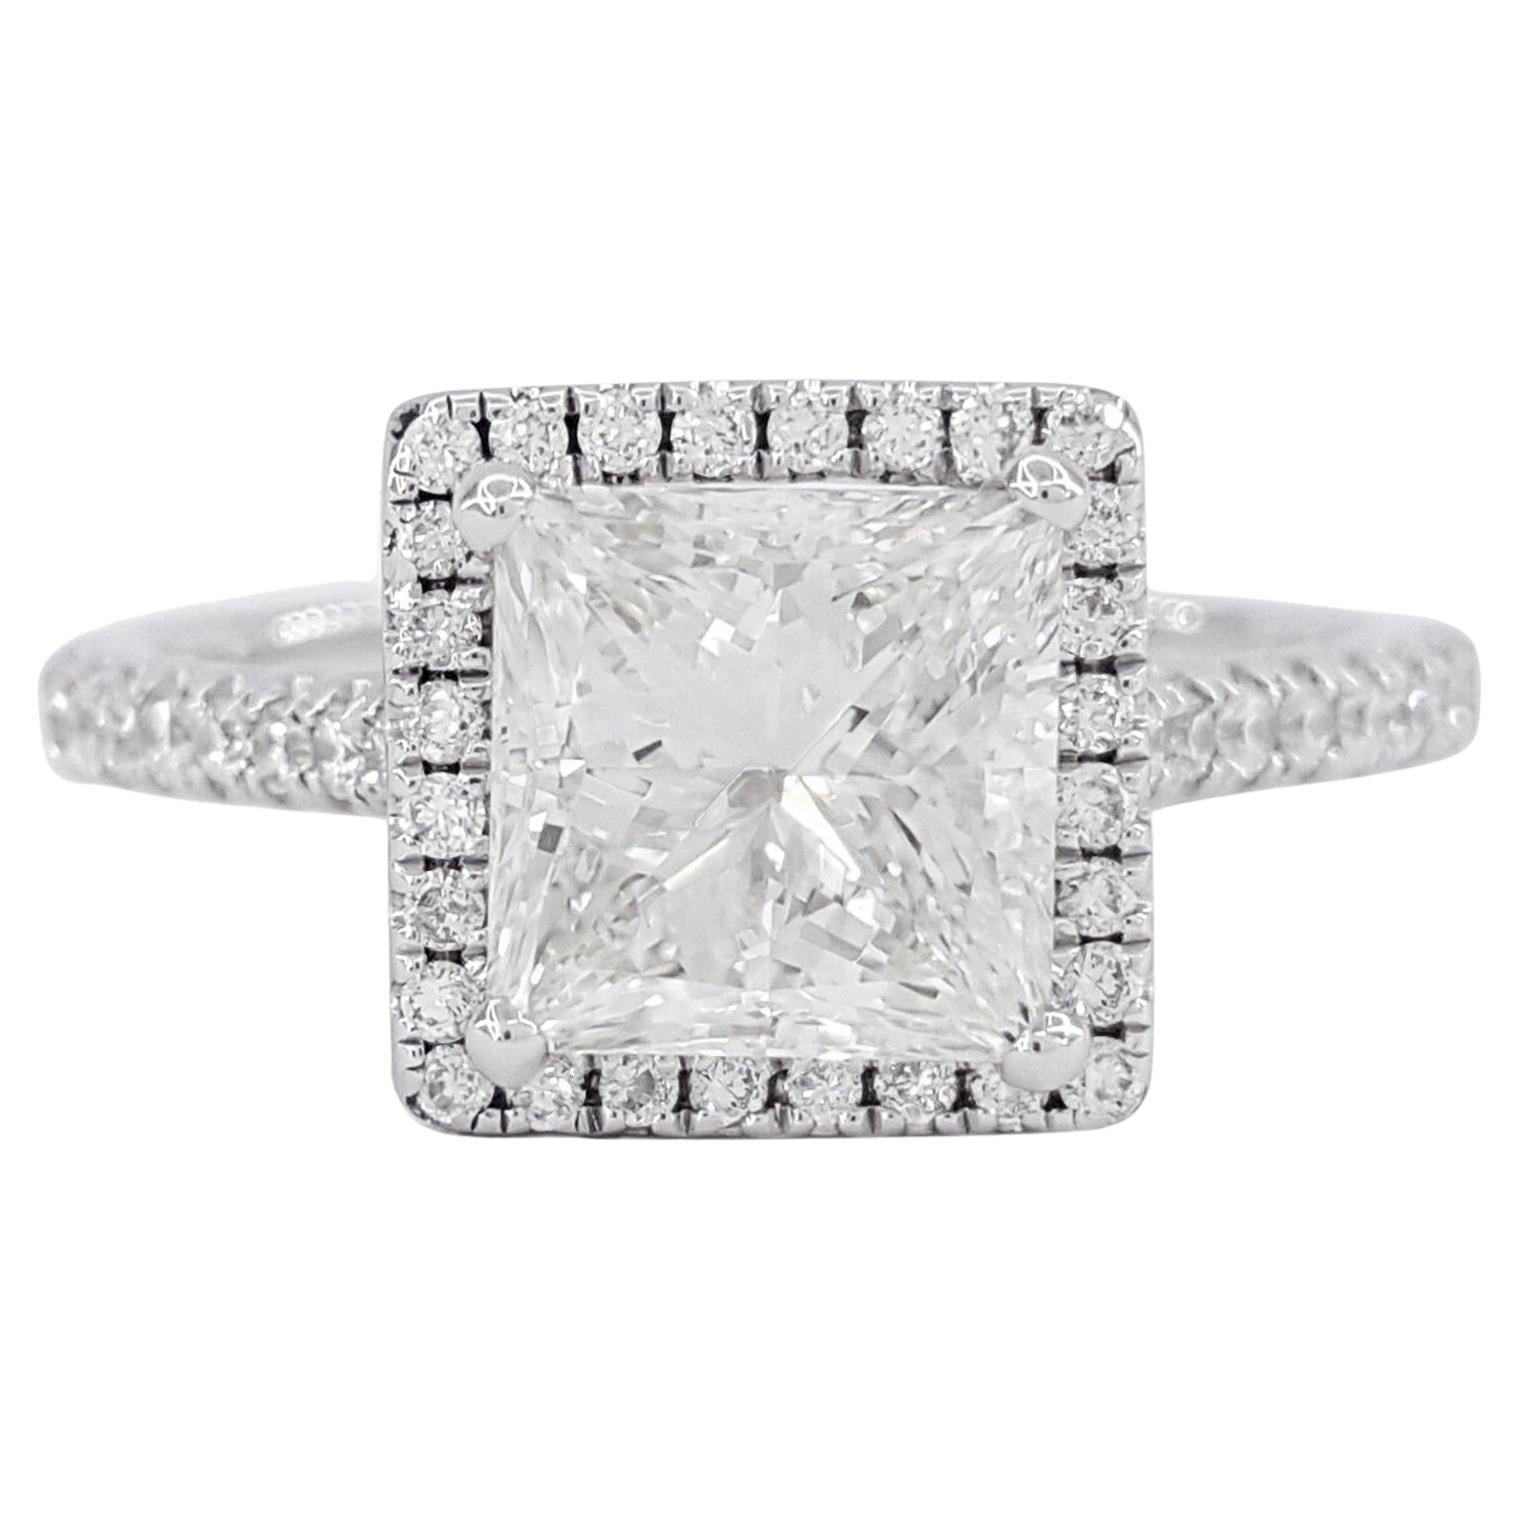 Tiffany & Co. Princess Cut Diamond Ring